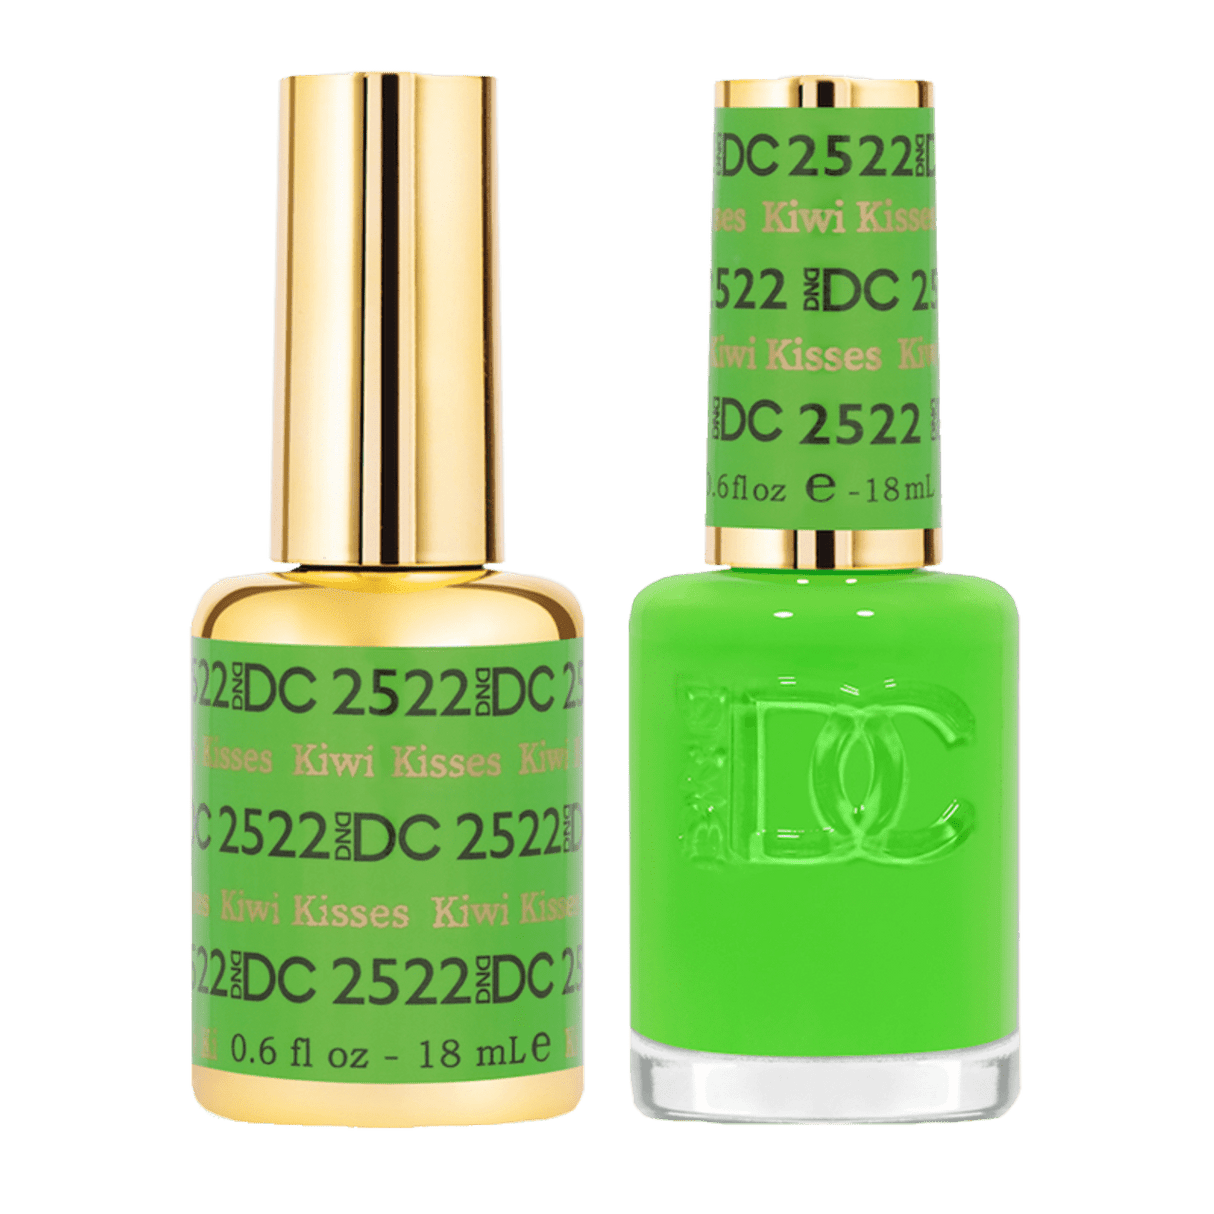 DND DC Duo Gel Matching Color 2522 Kiwi Kisses